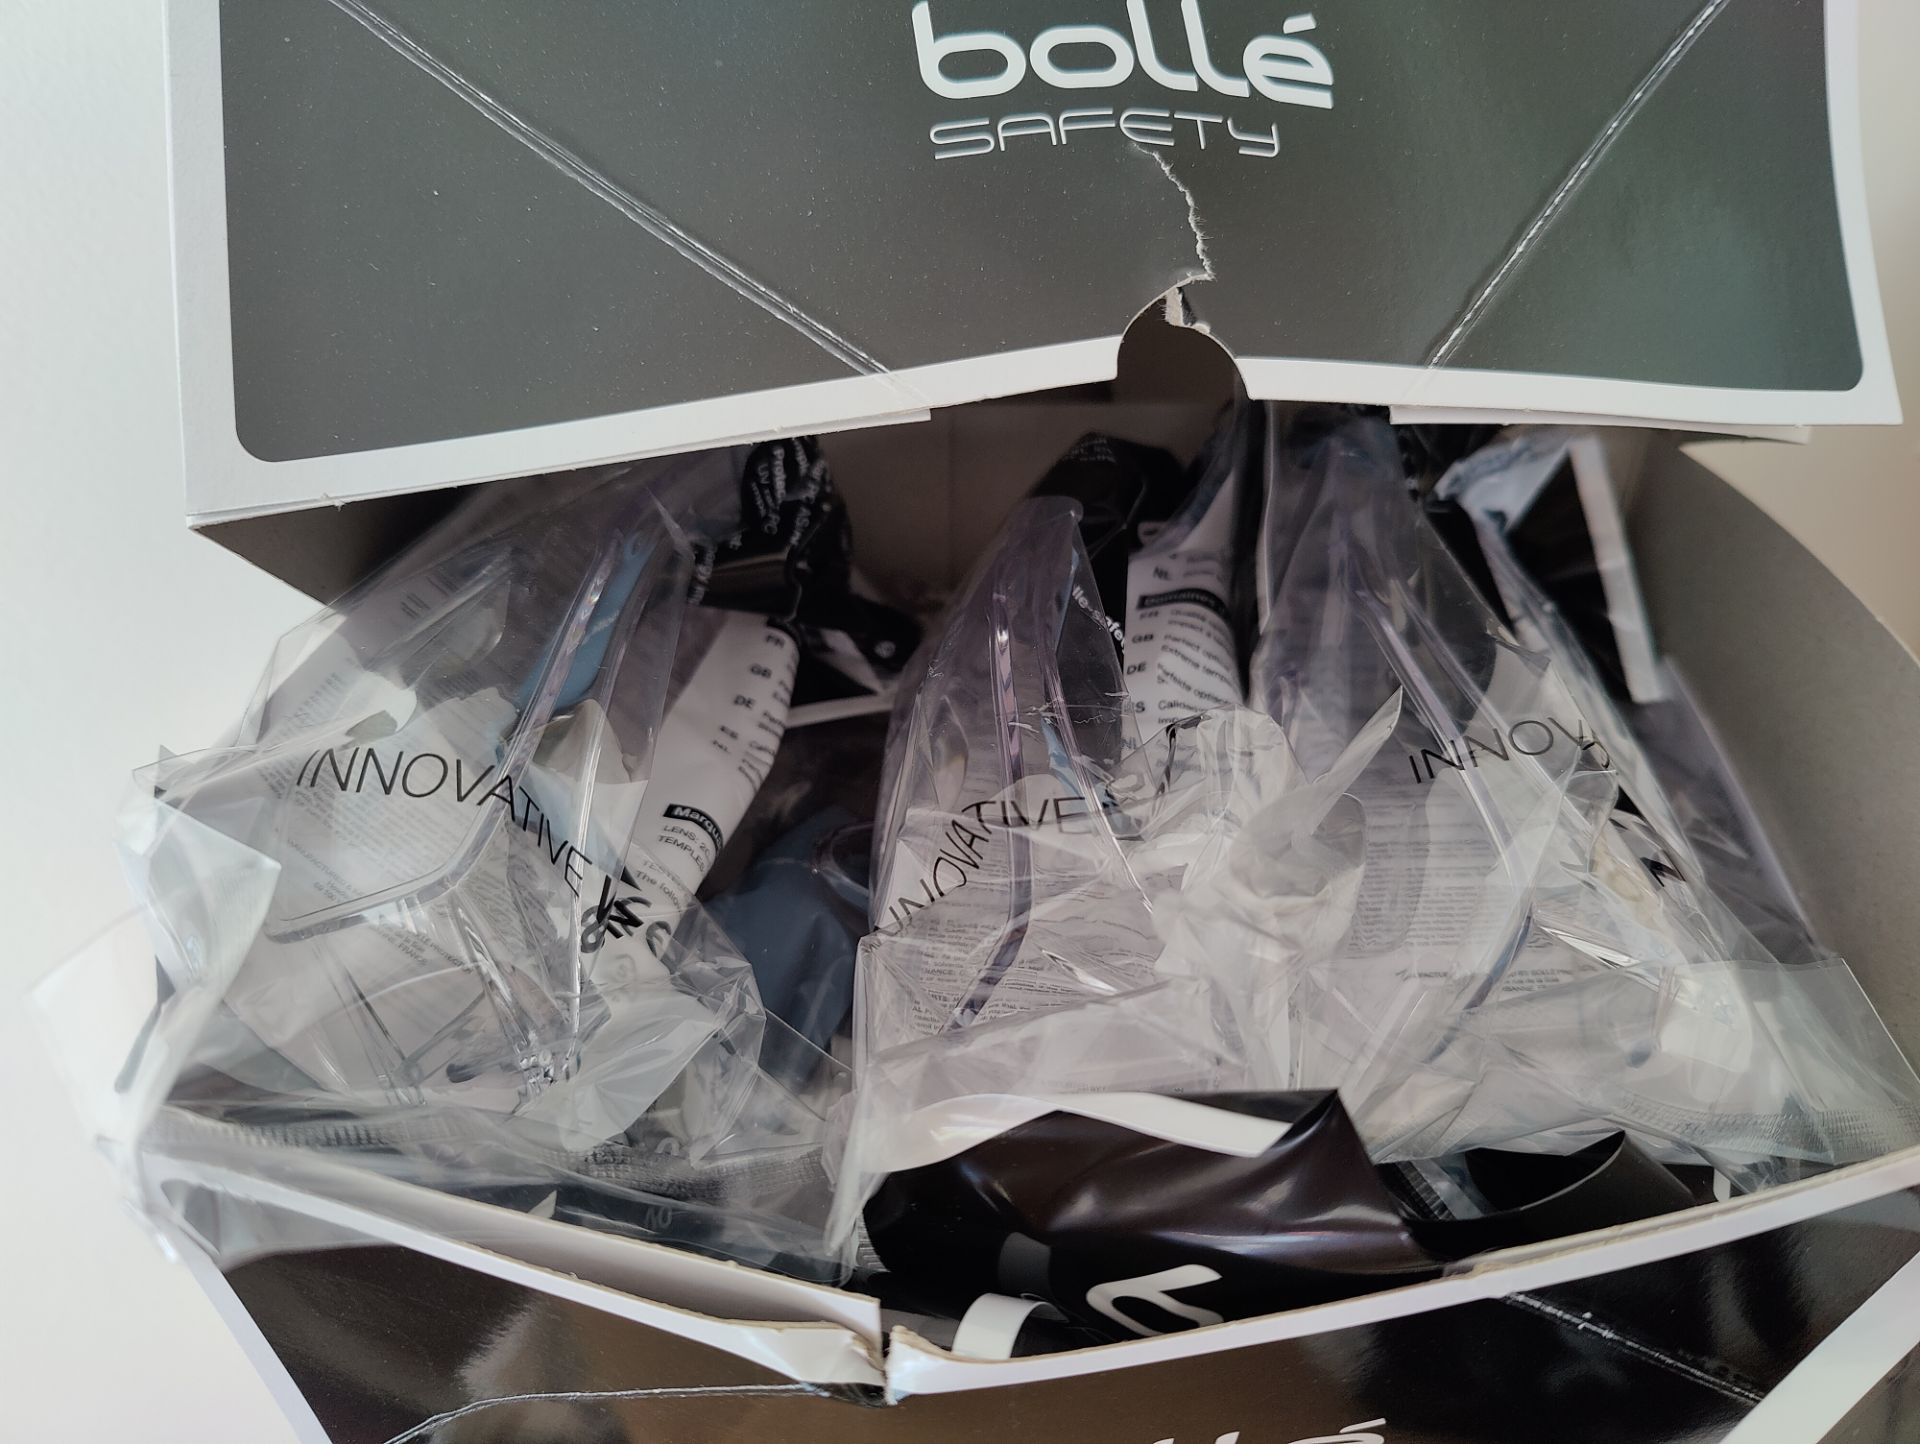 3 x Box of 10 Bolle Safety Overlight Protective Eyewear - Image 2 of 3